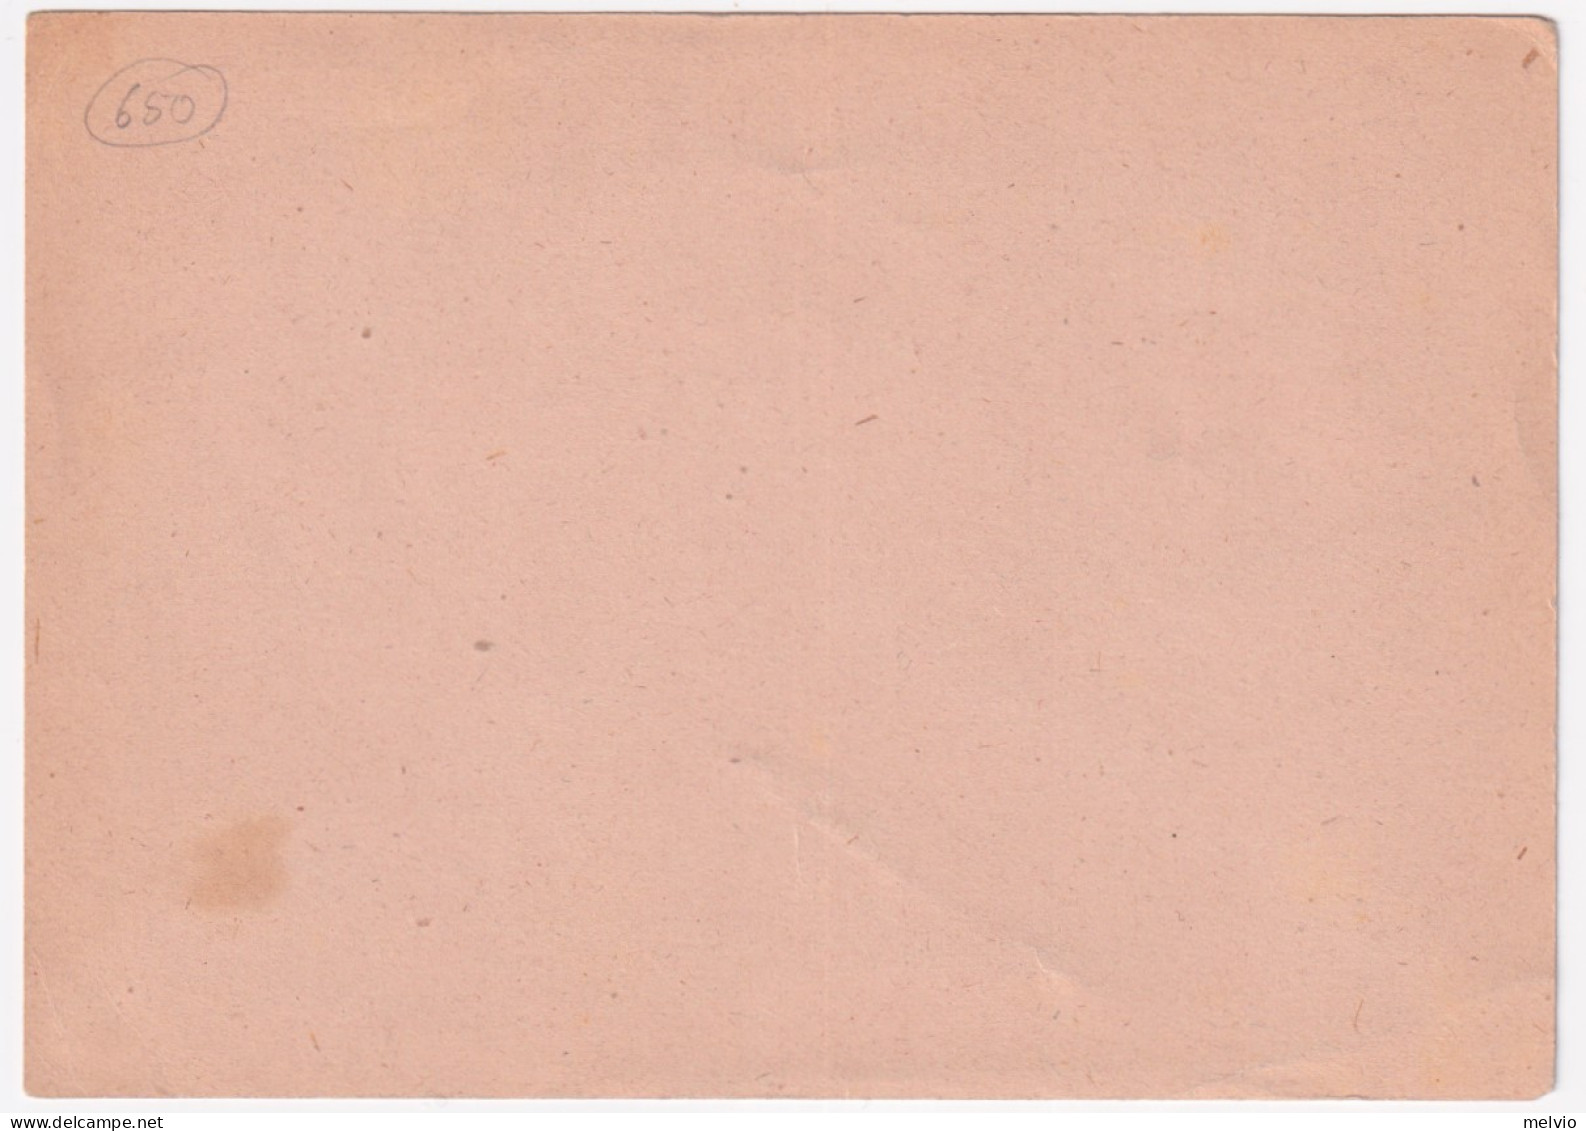 1946-Cartolina Postale Lire 3 Fiaccola (C131) Nuova - Ganzsachen